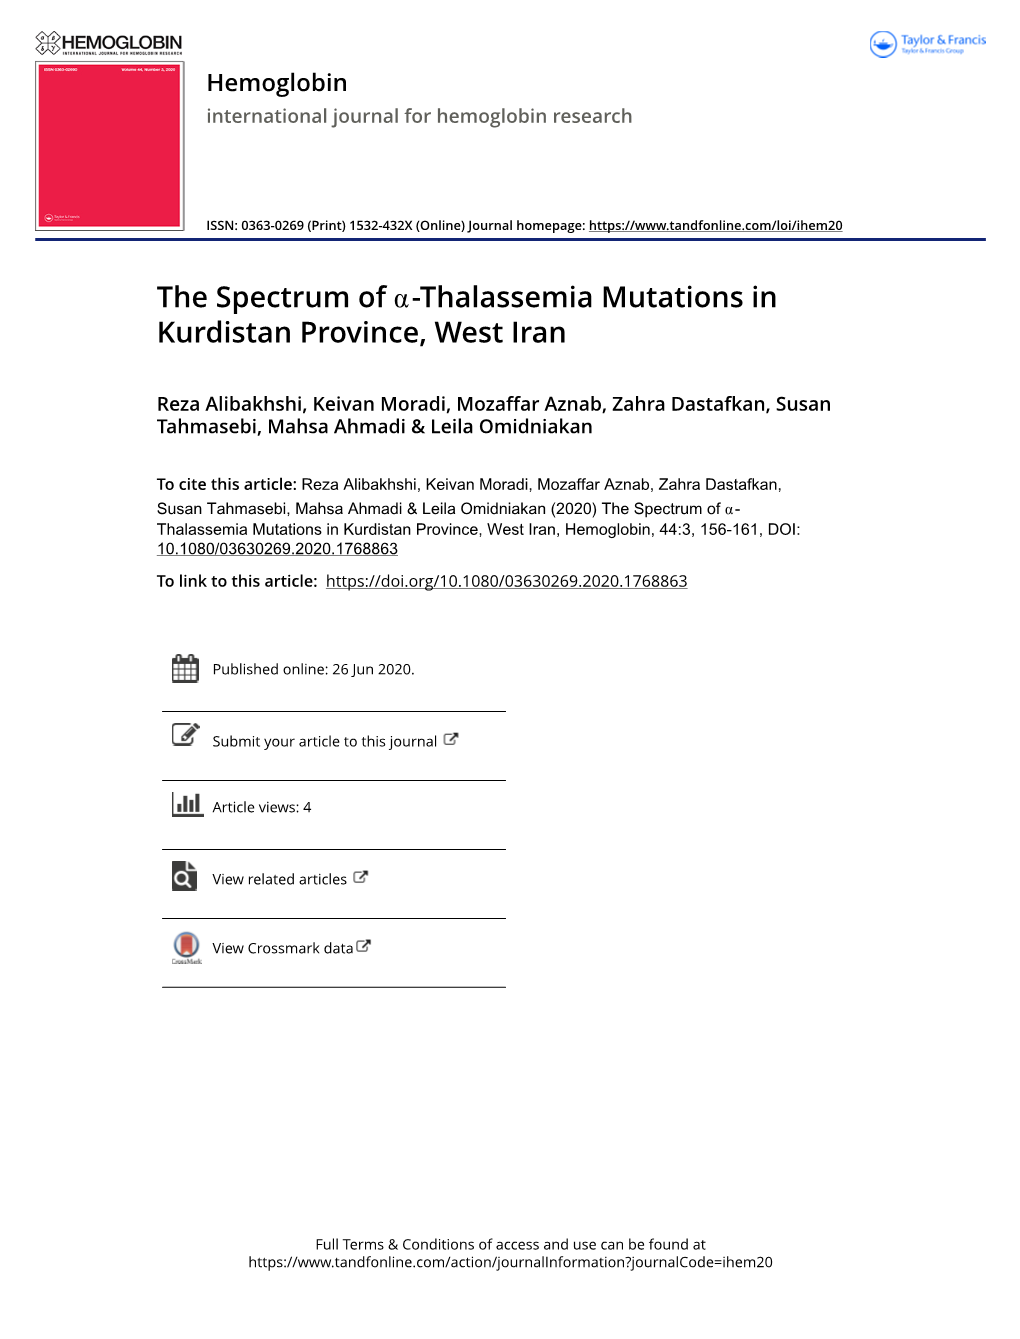 The Spectrum of Α-Thalassemia Mutations in Kurdistan Province, West Iran